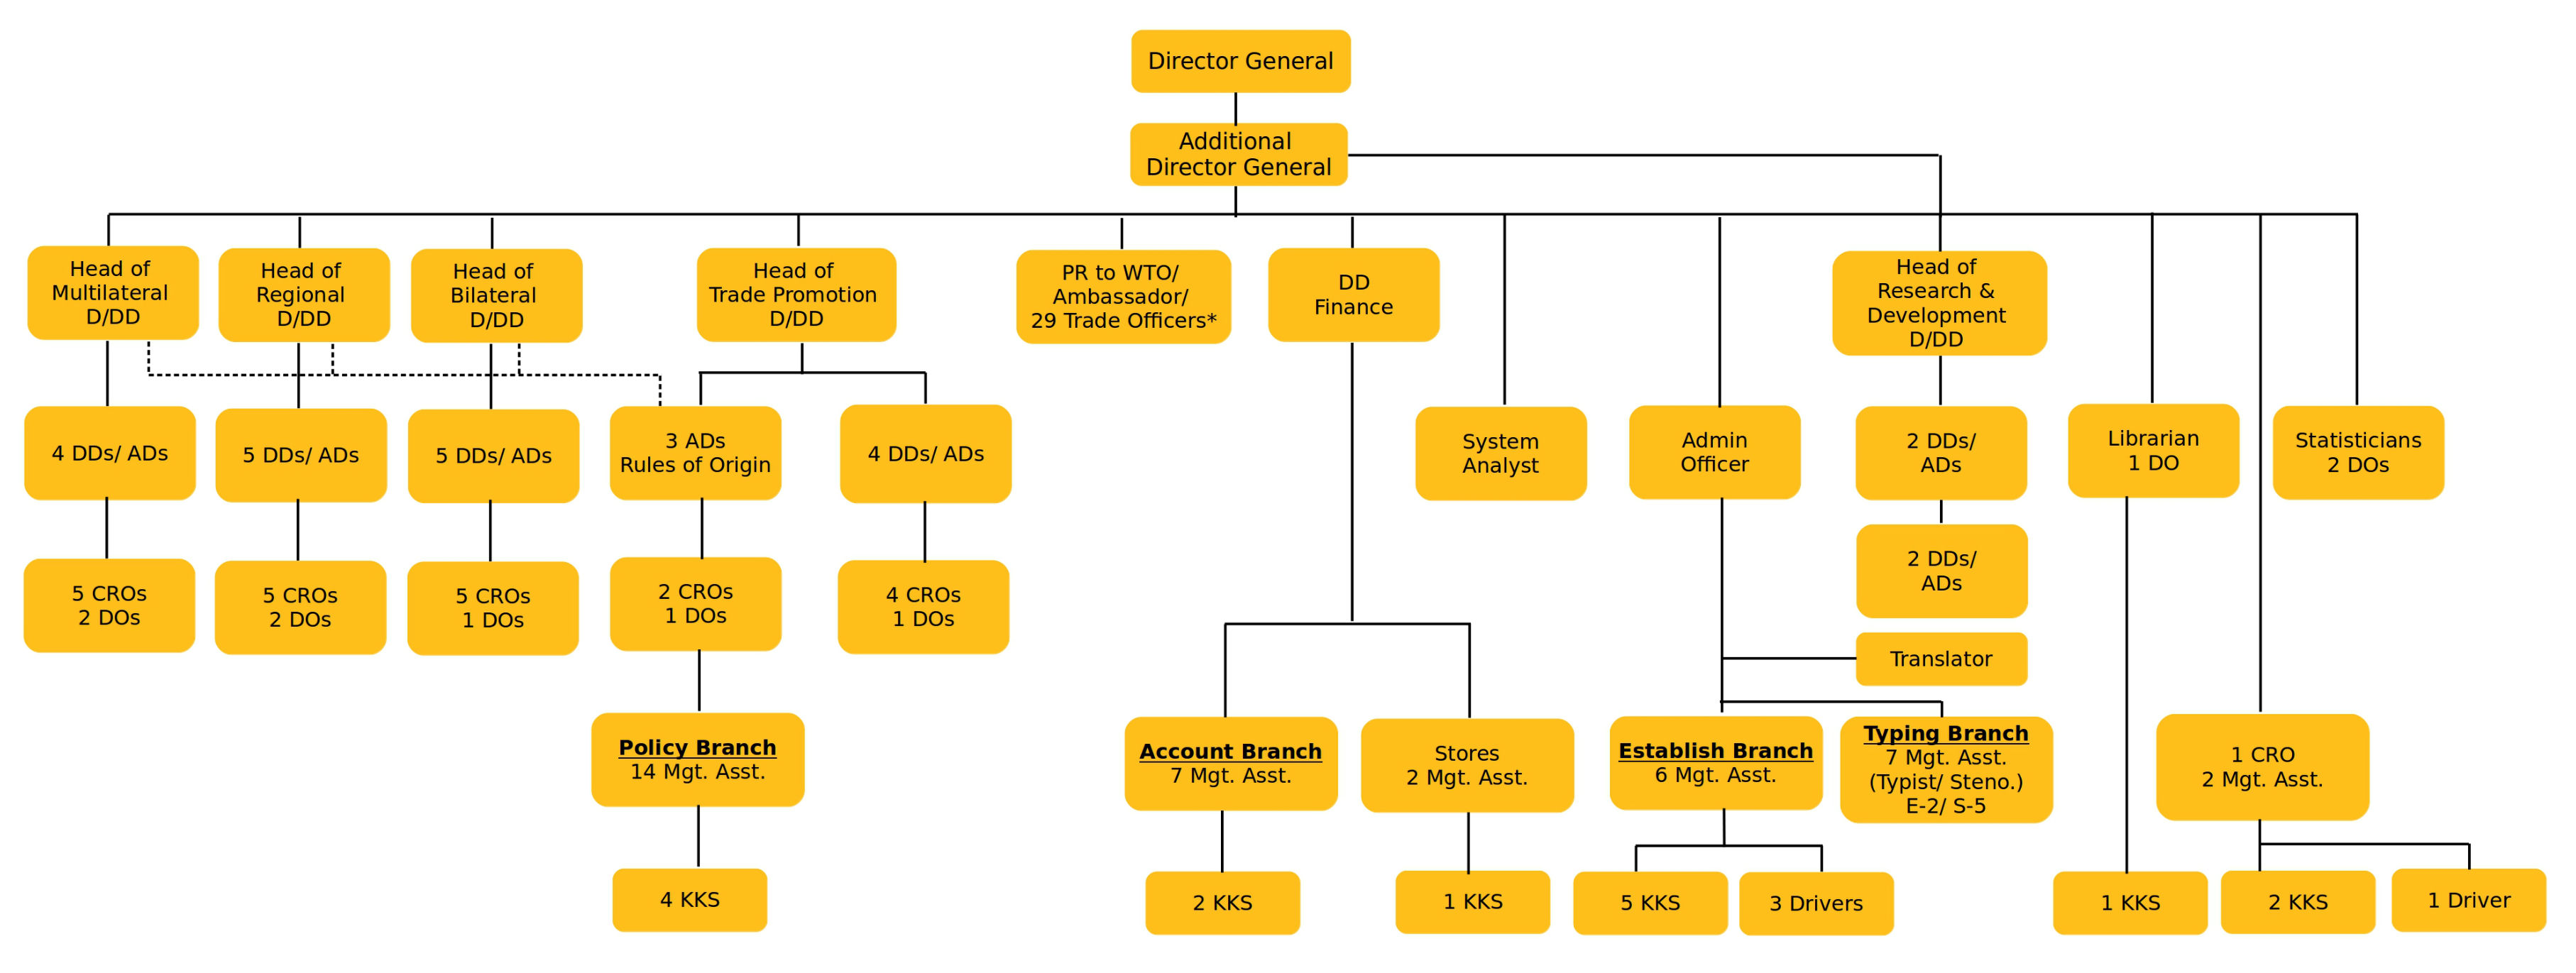 organization structure en